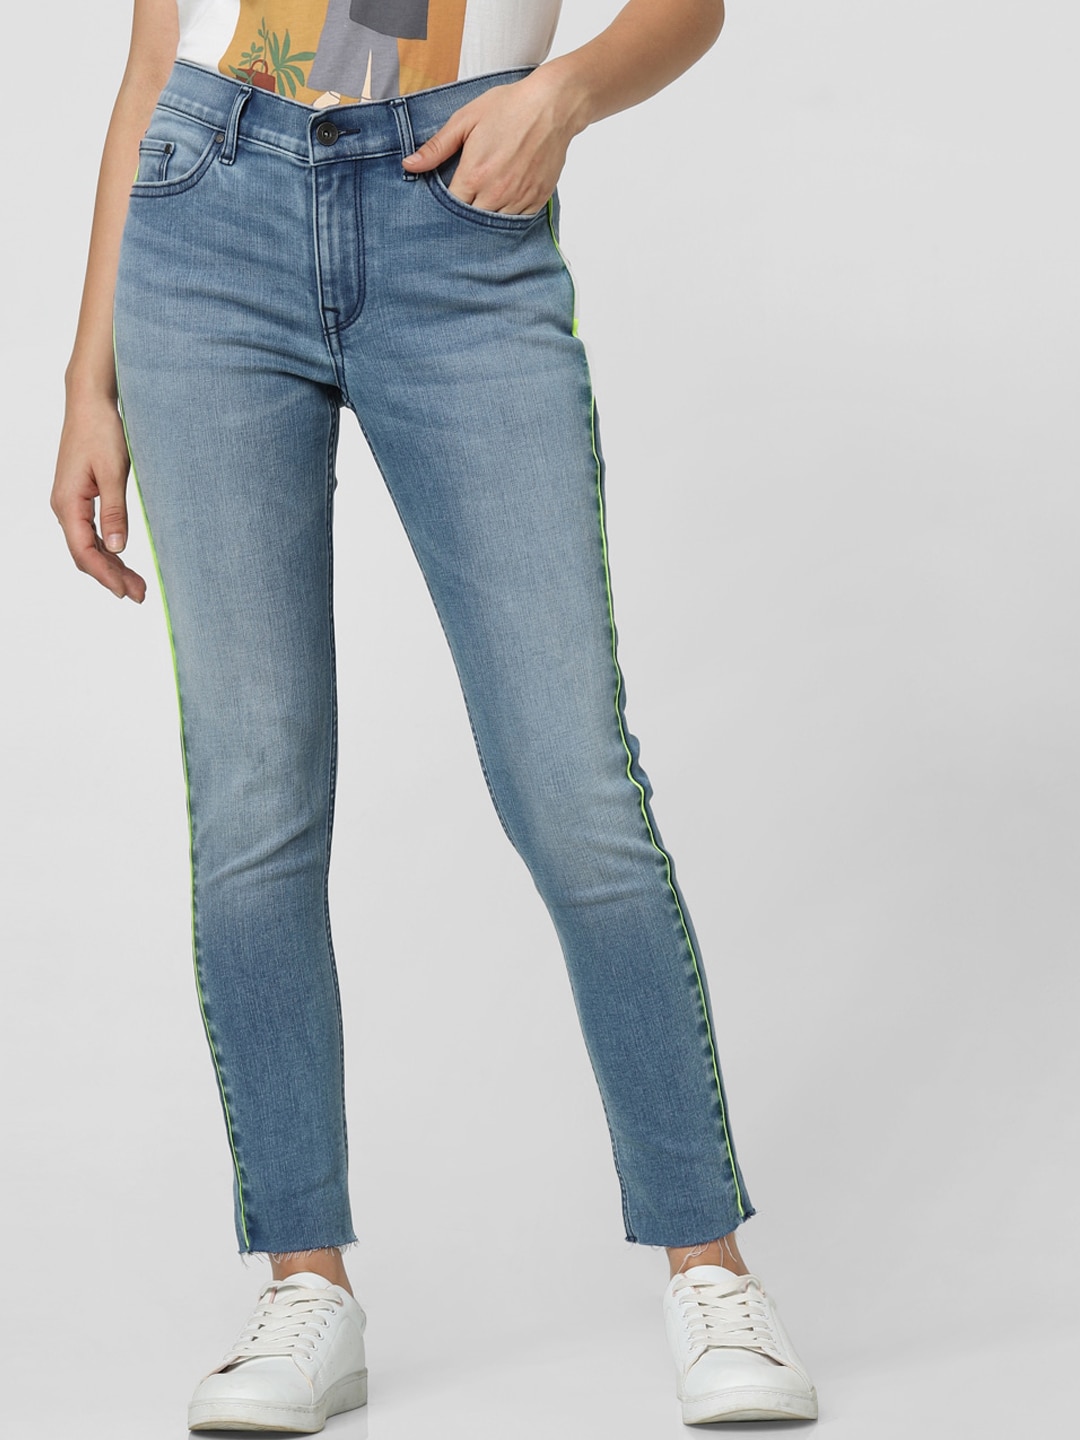 Vero Moda Women Blue Skinny Fit Heavy Fade Jeans Price in India